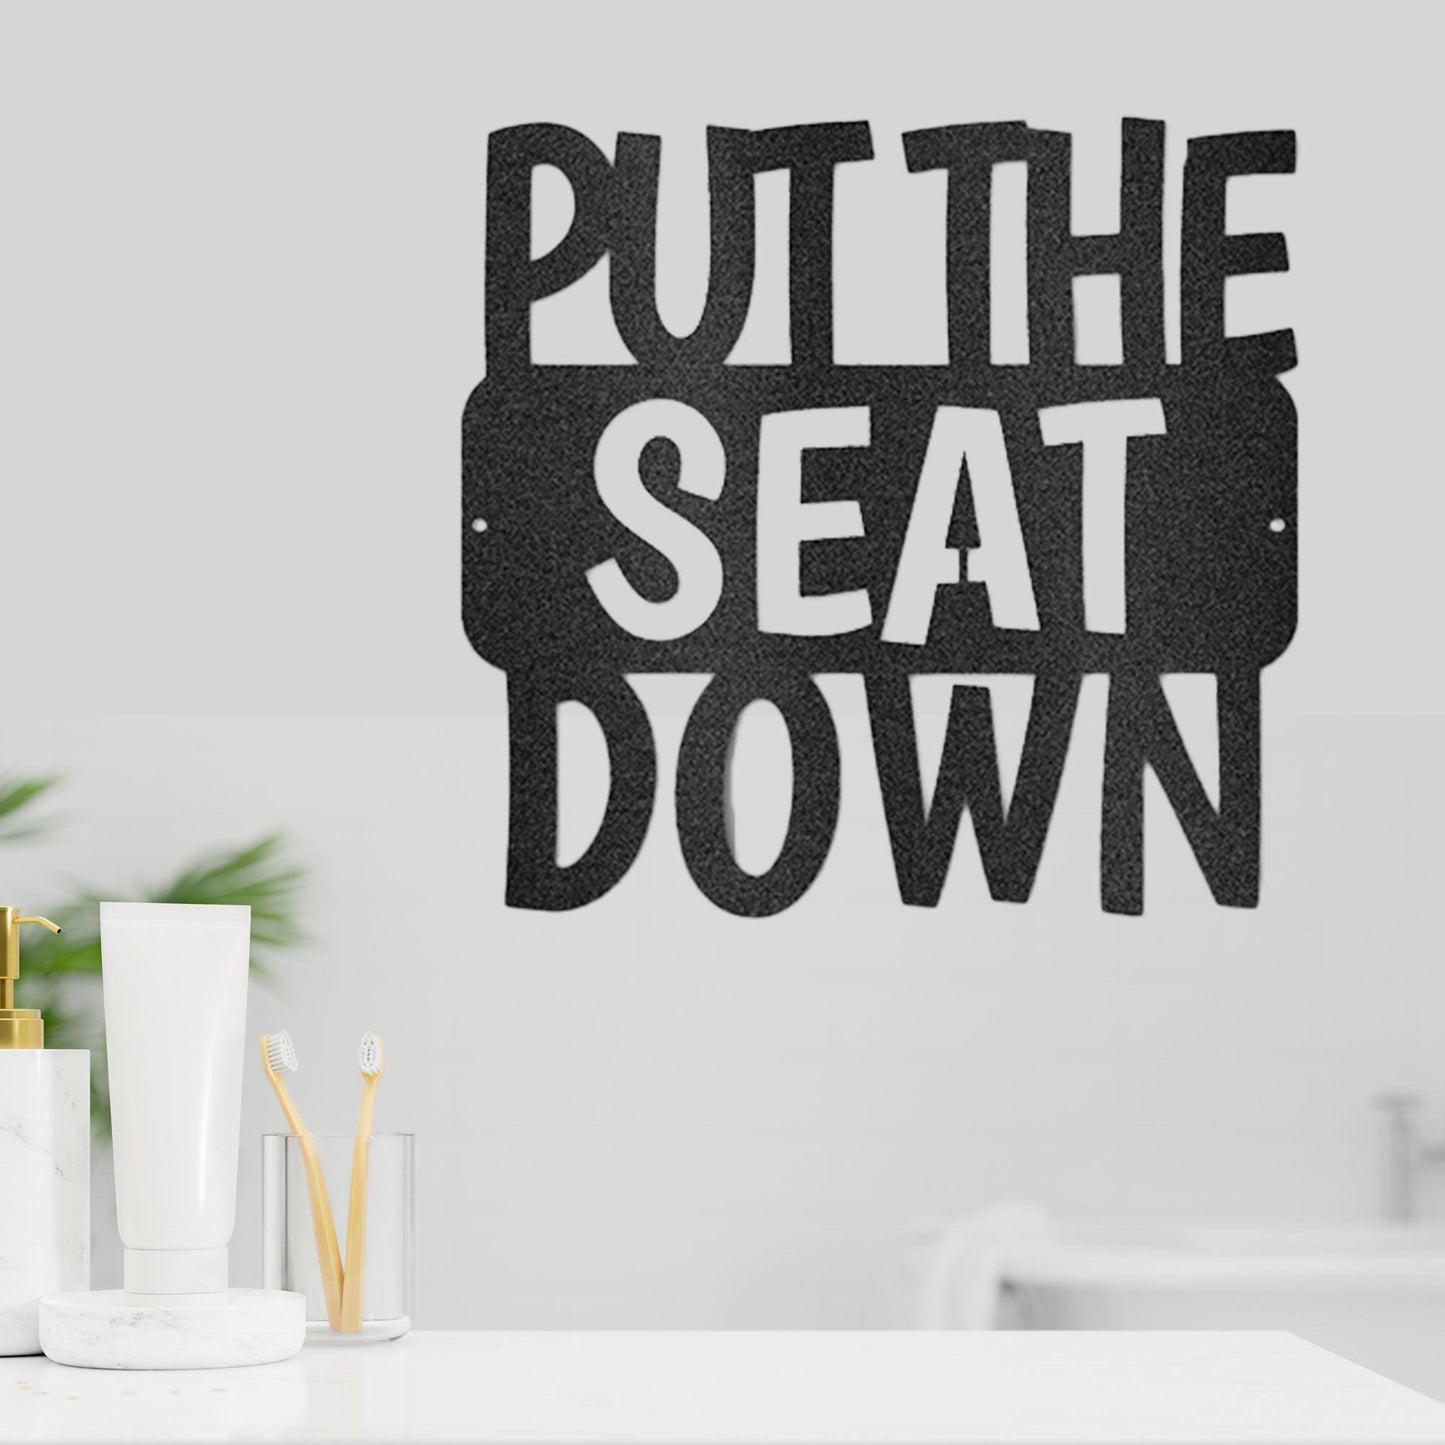 Put the Seat Down Quote Steel Bathroom Wall Sign - Mallard Moon Gift Shop